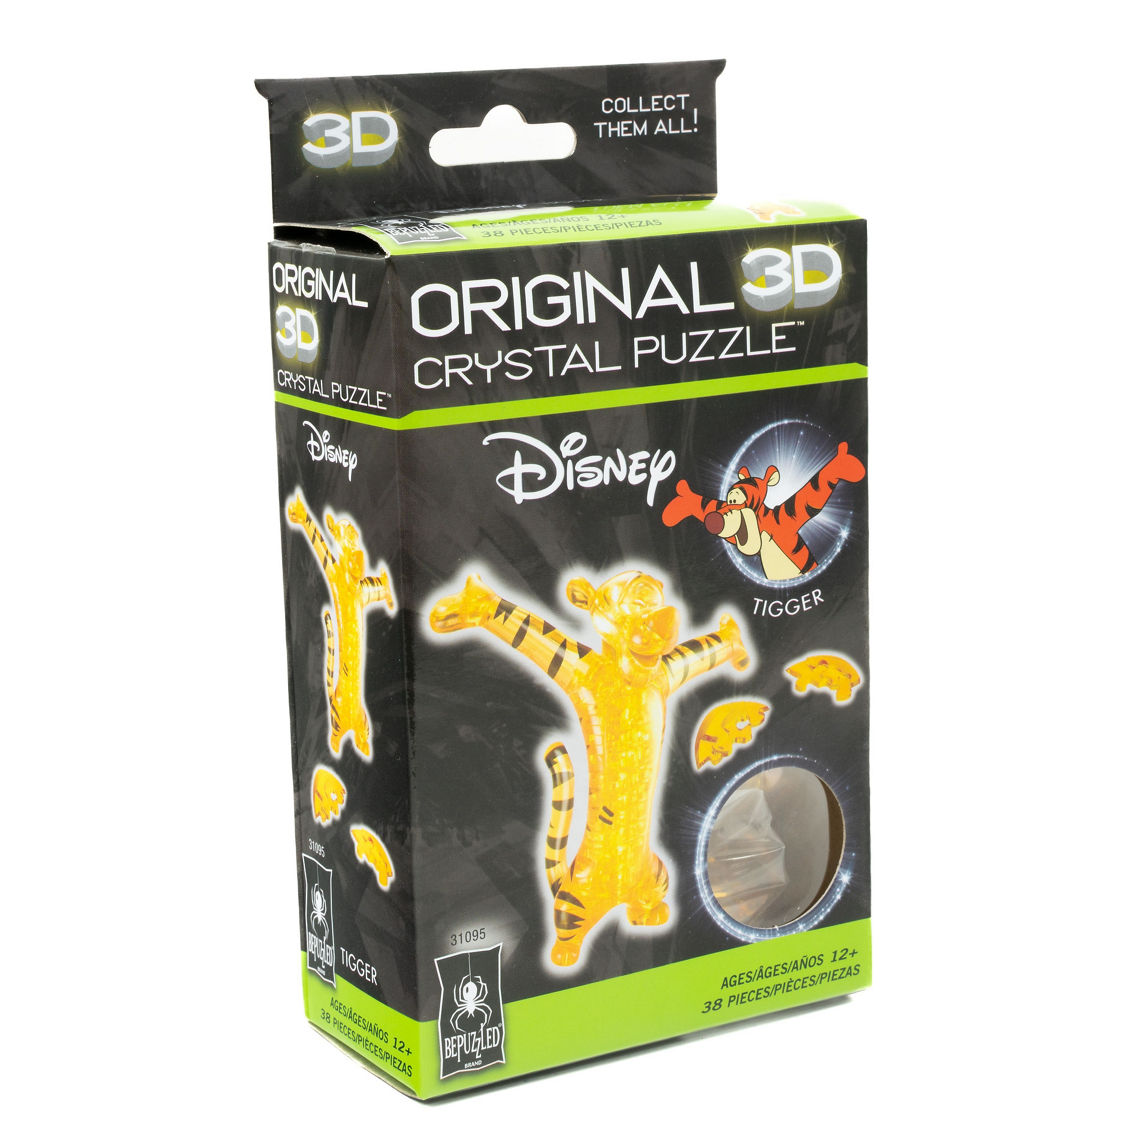 BePuzzled 3D Crystal Puzzle - Disney Tigger (Orange/Black): 38 Pcs - Image 2 of 5